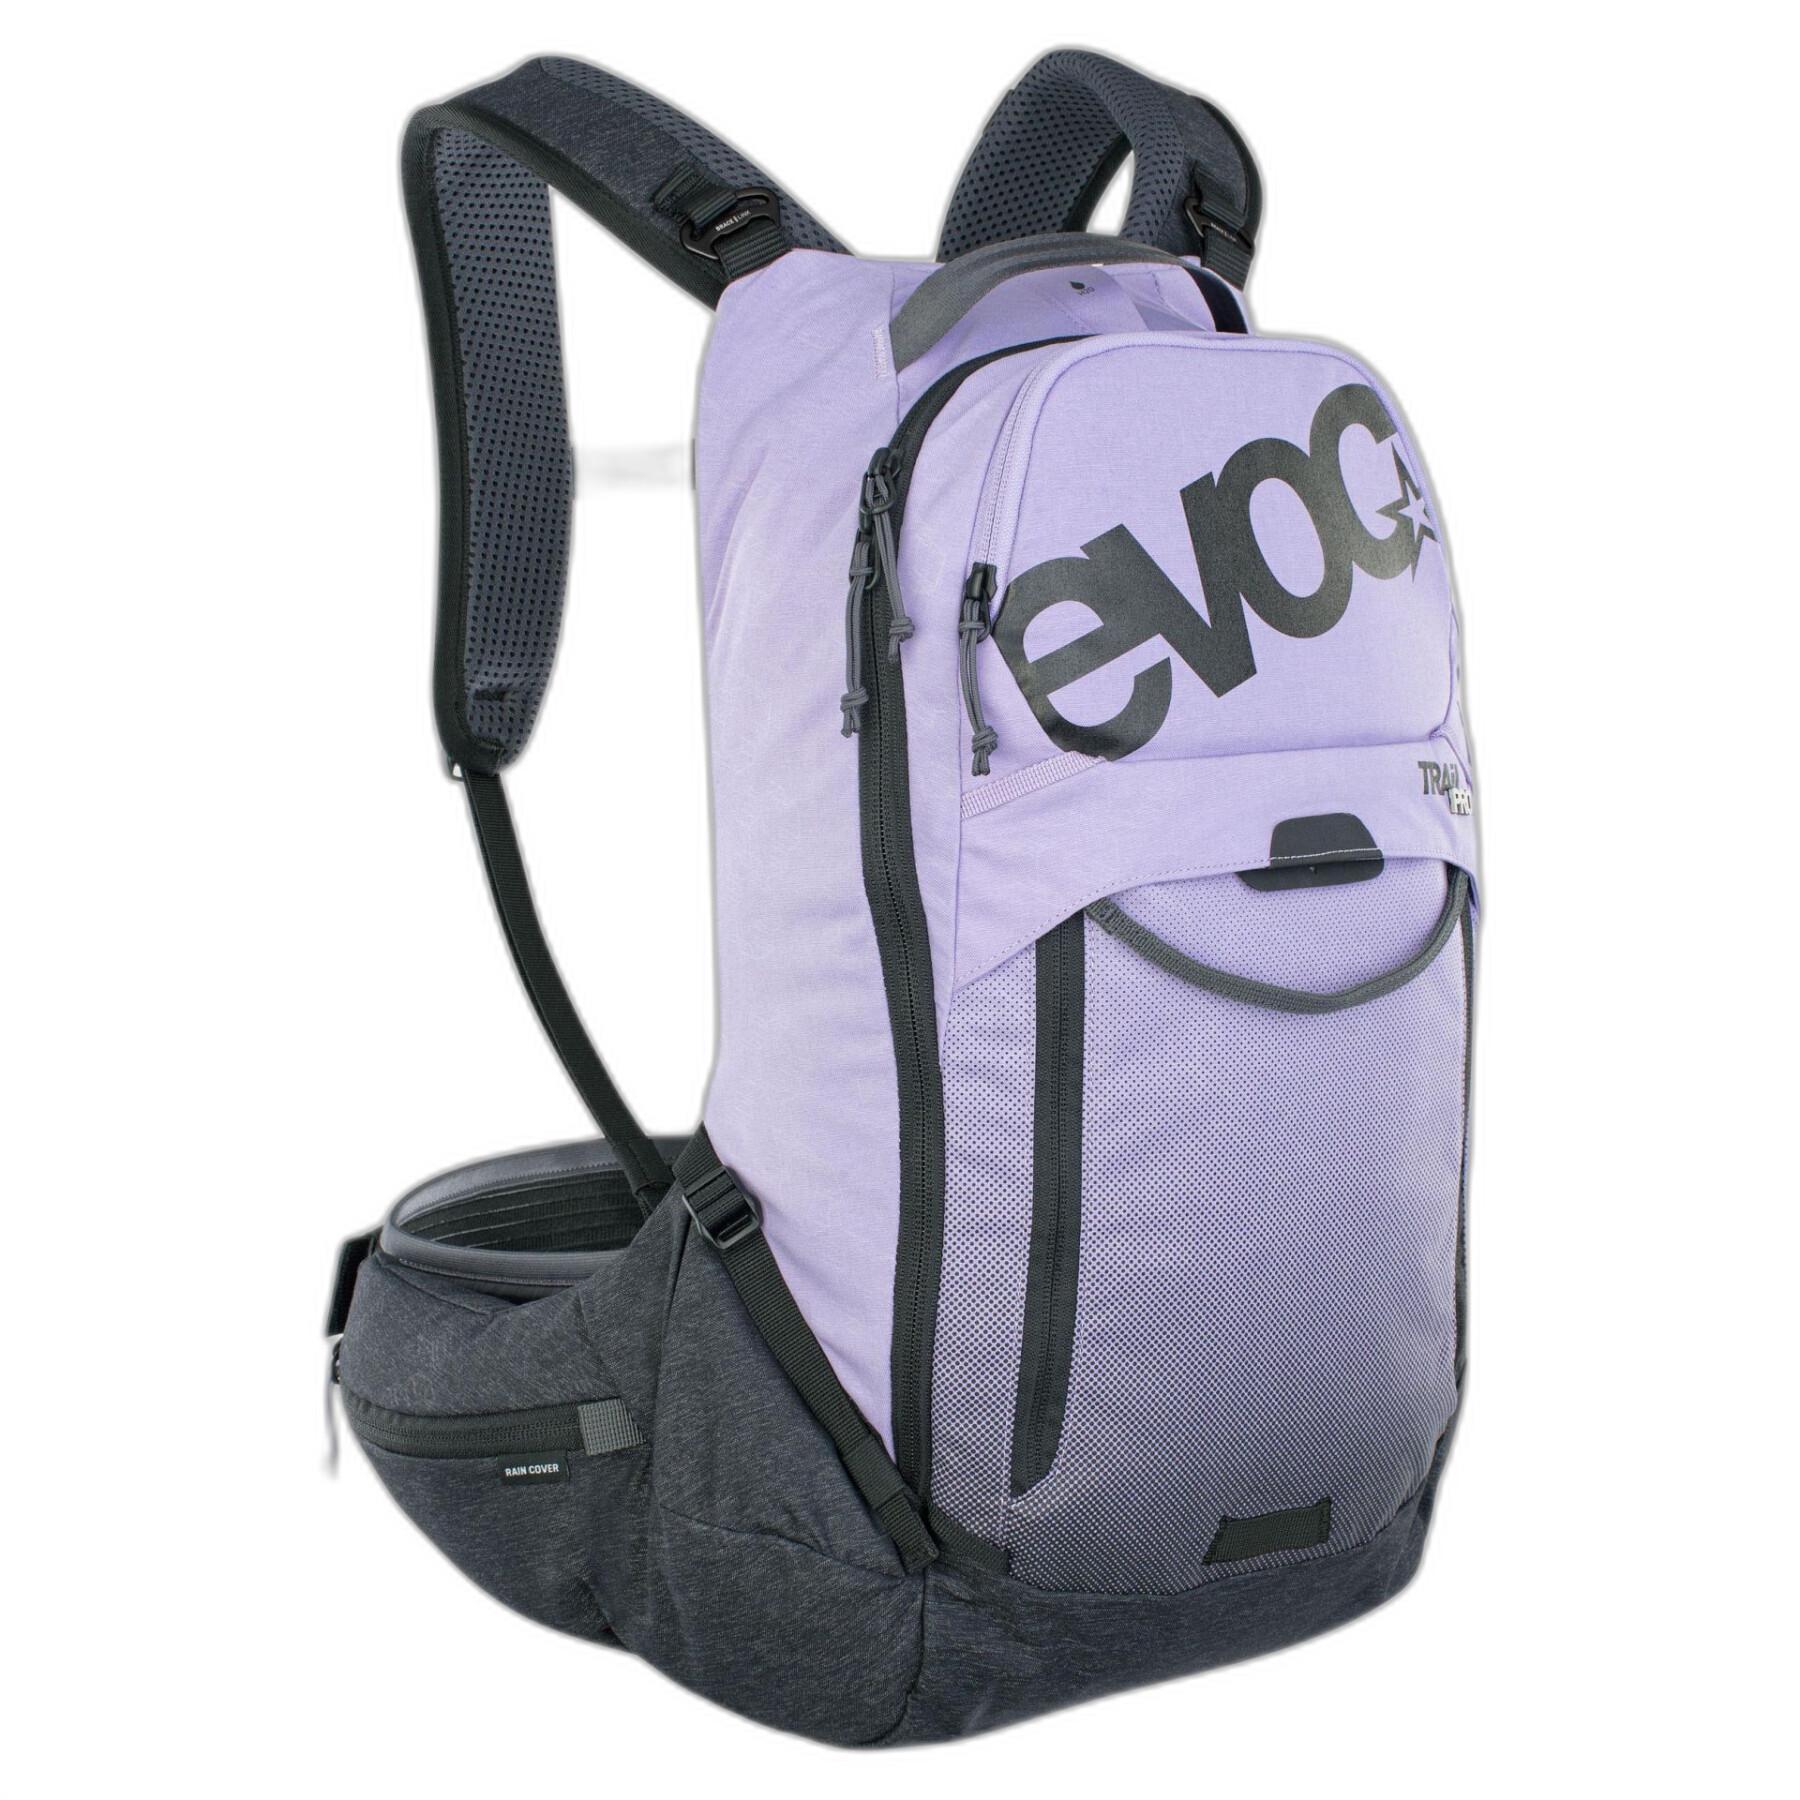 Backpack Evoc trail pro 16